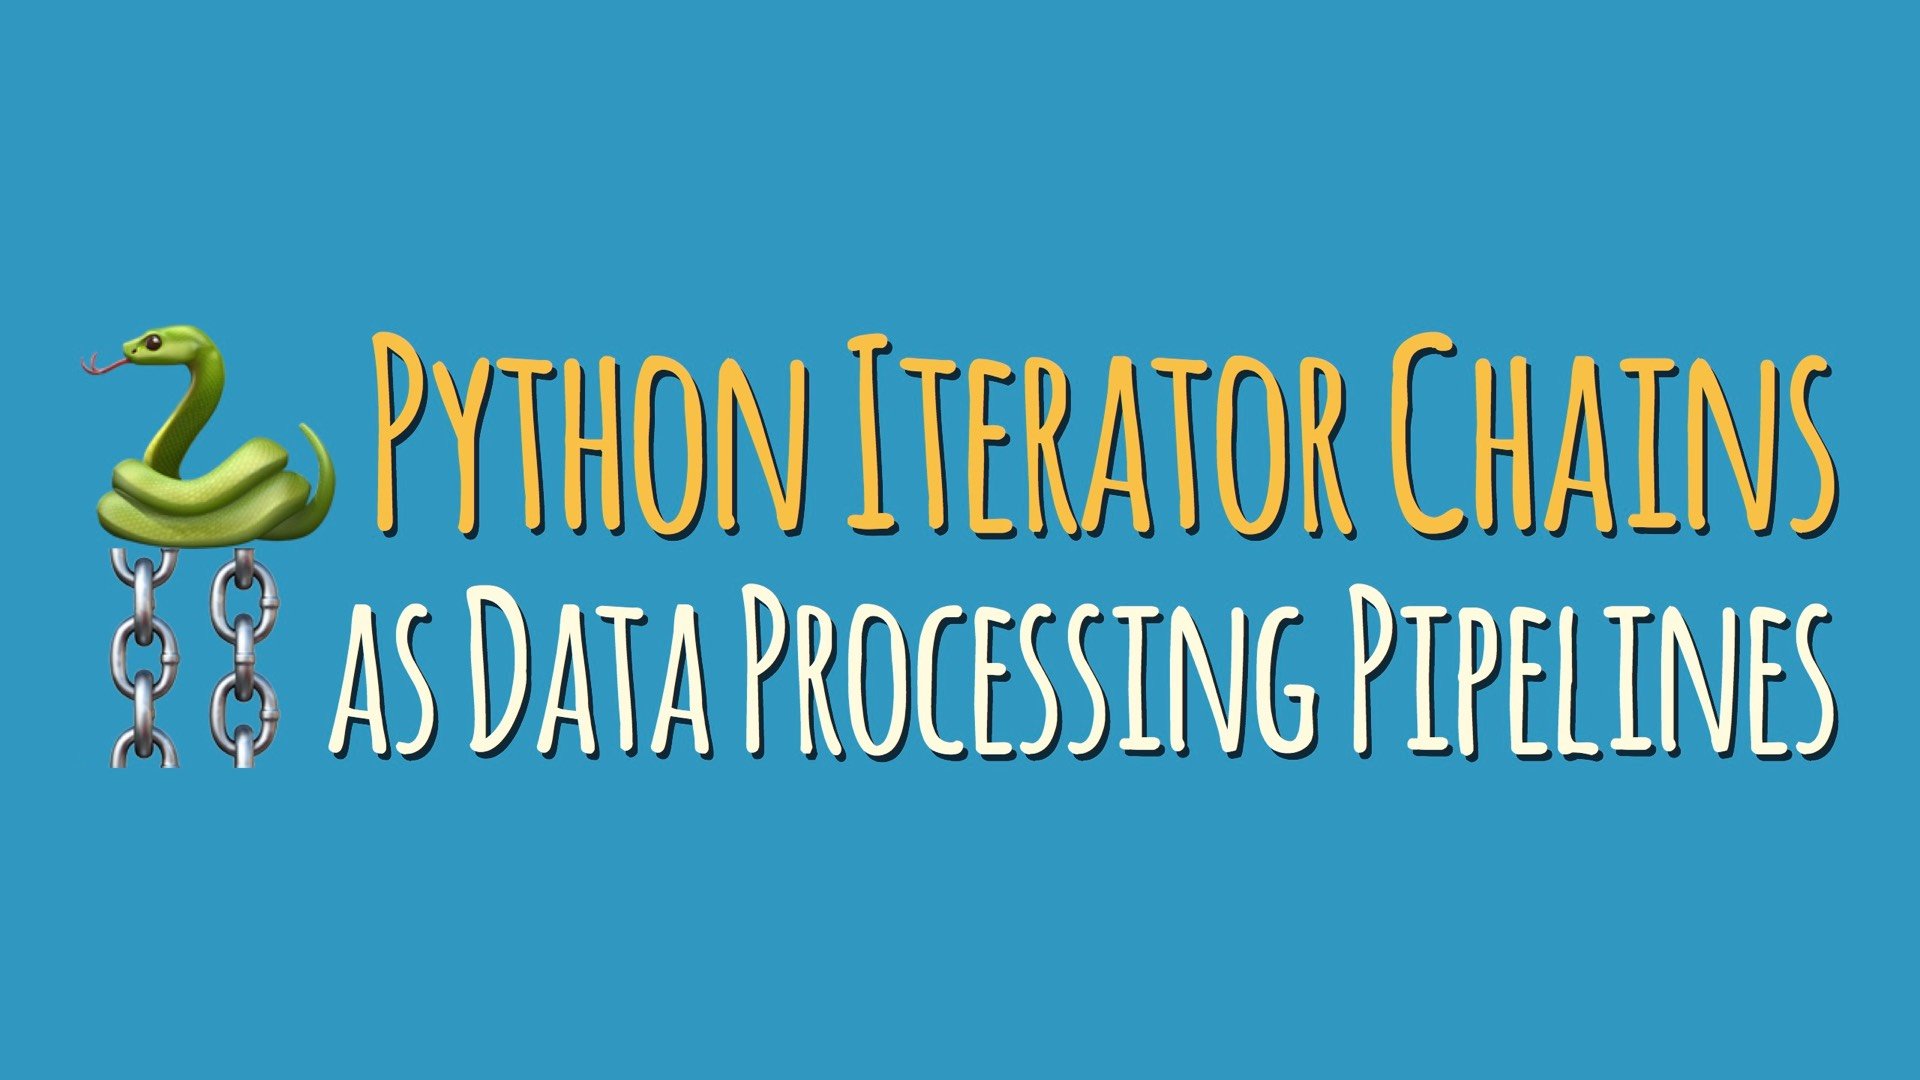 Python Iterator Chains